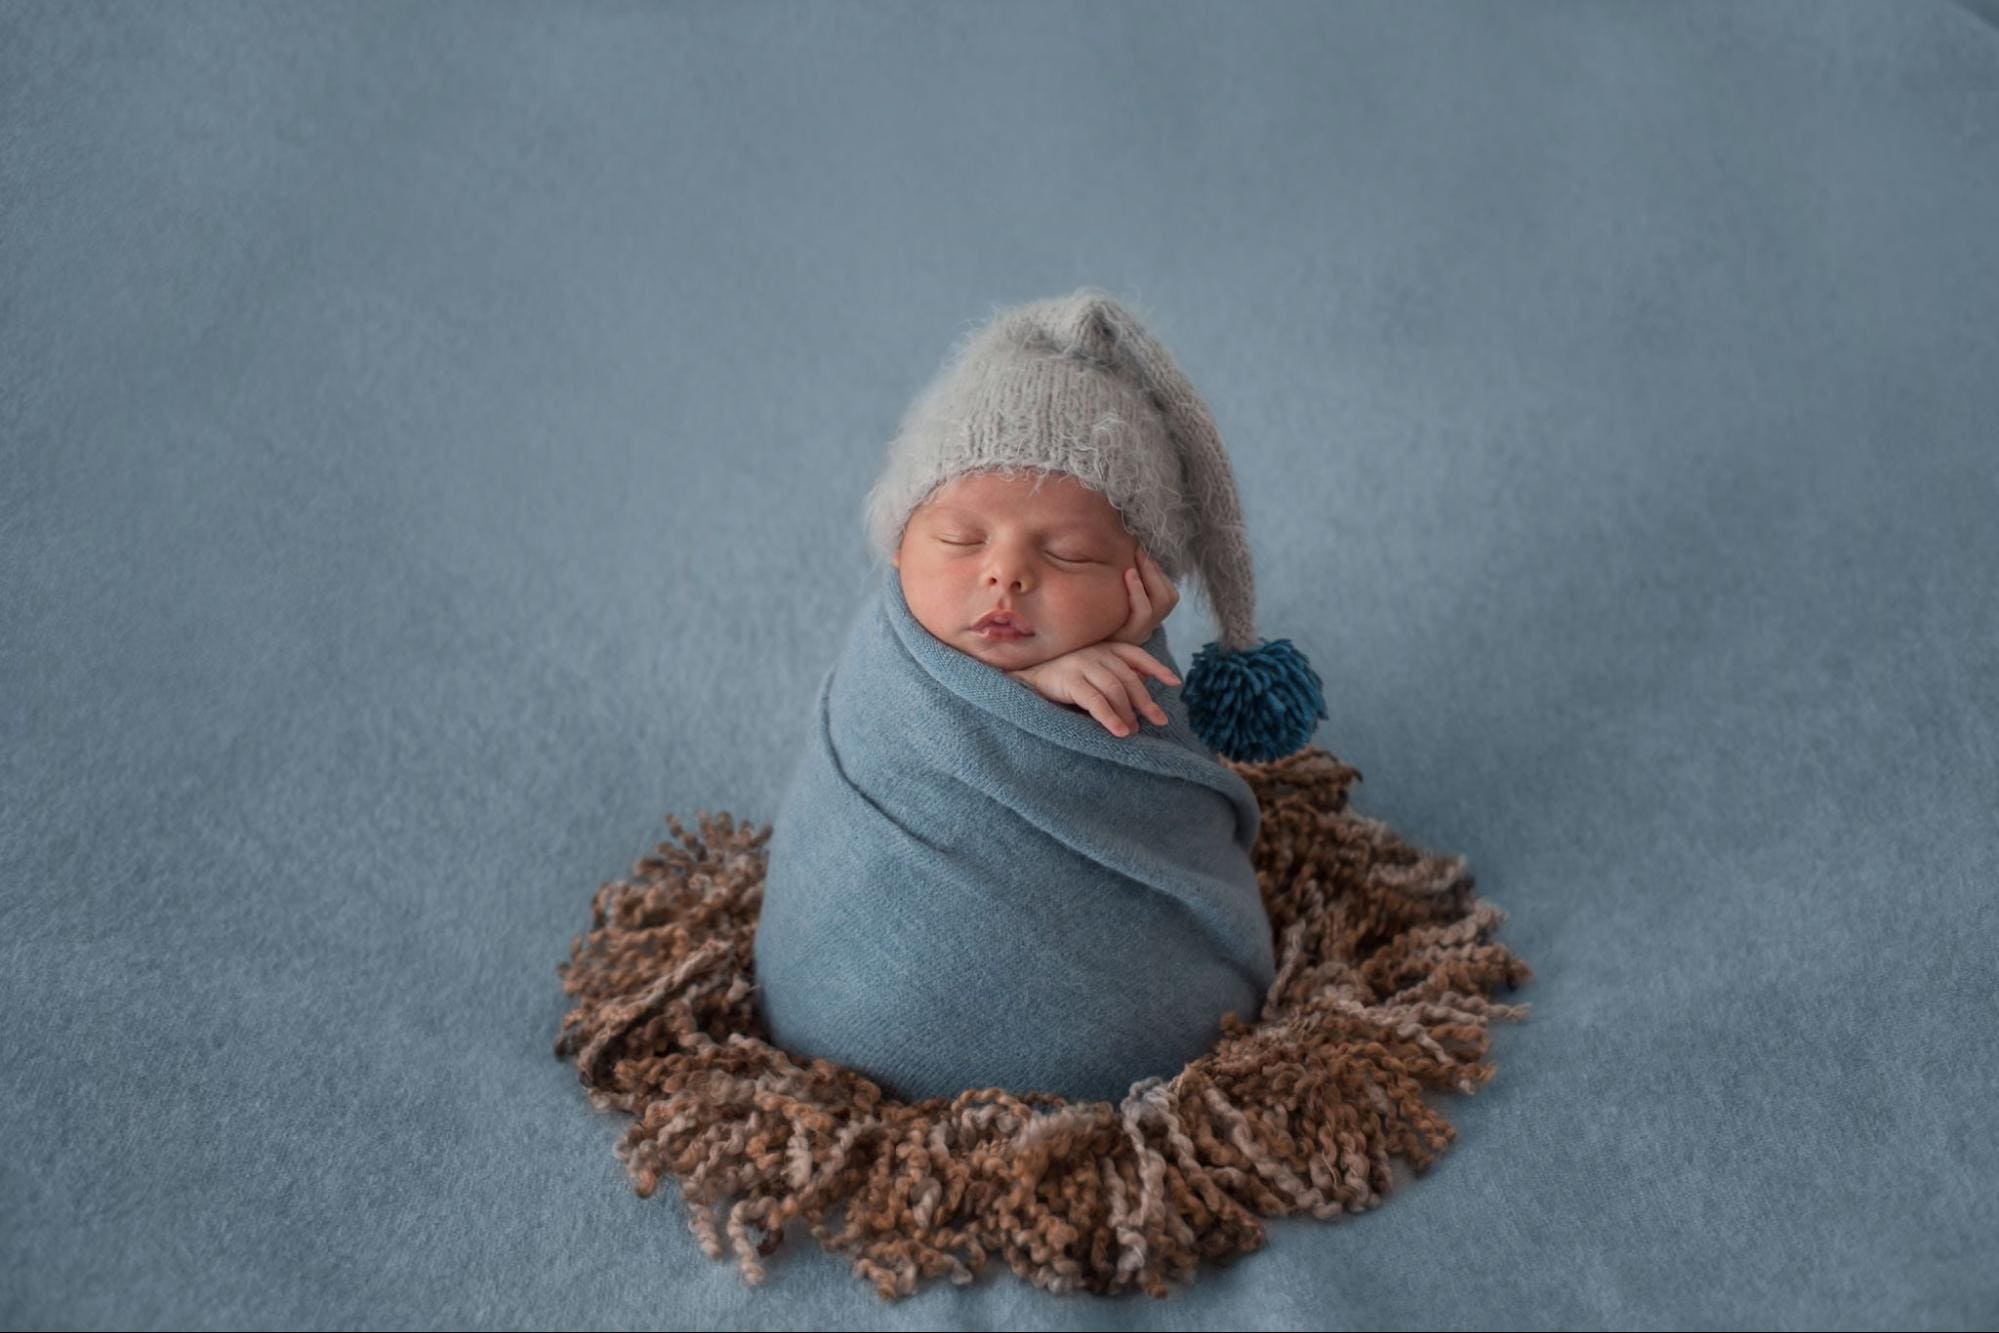 Newborn Baby Photography Ideas at Home | Photojaanic